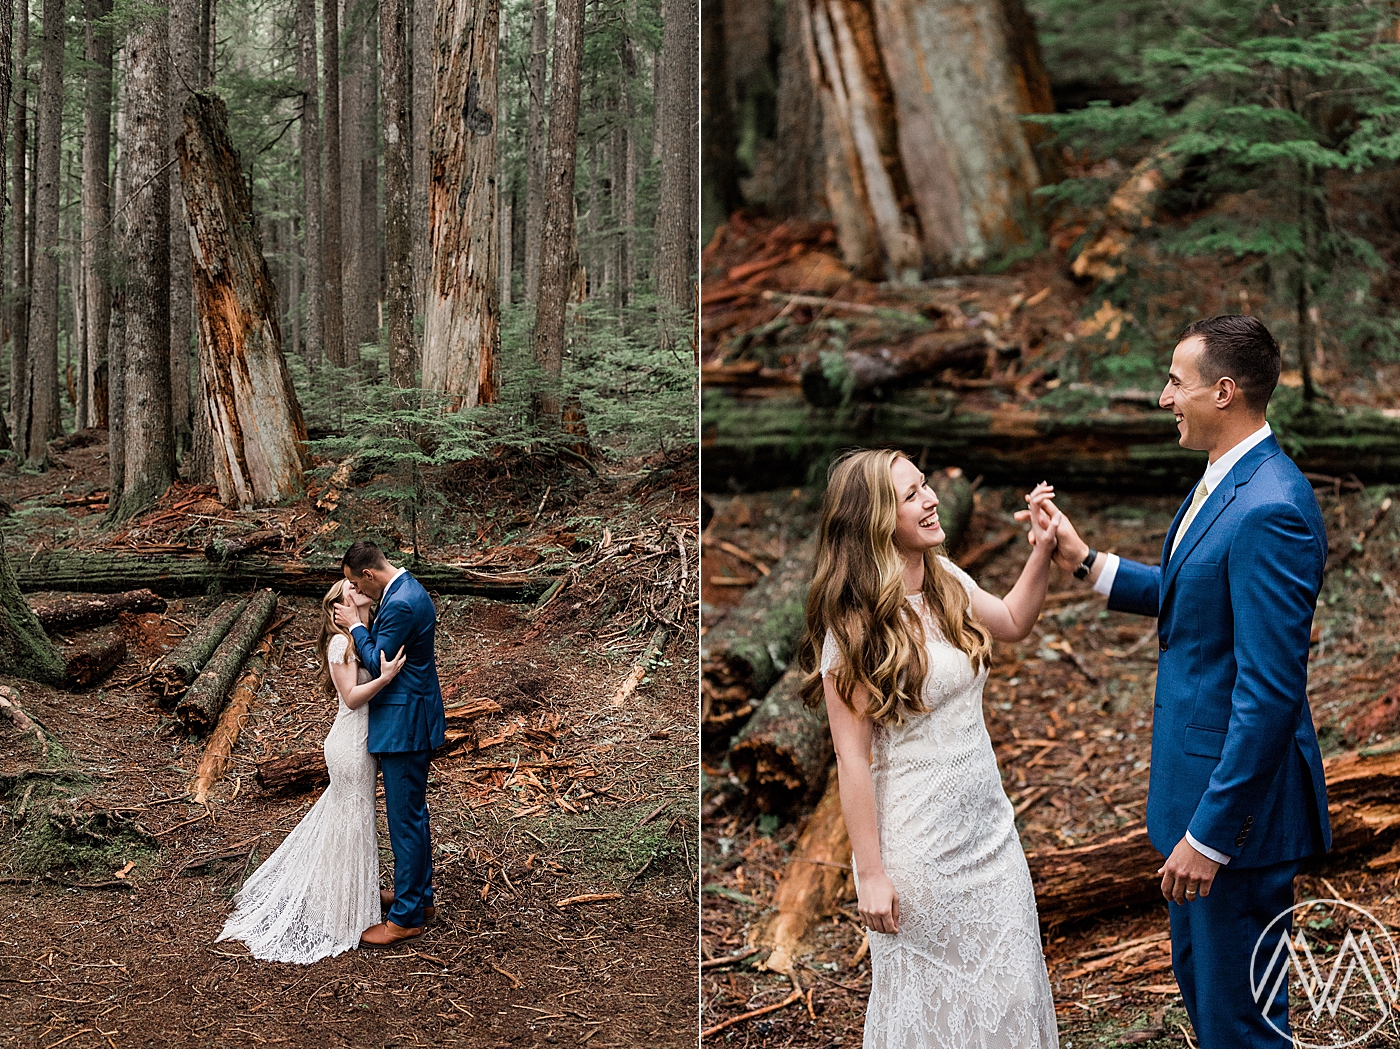 Intimate wooded ceremony at Mt. Rainier | Megan Montalvo Photography